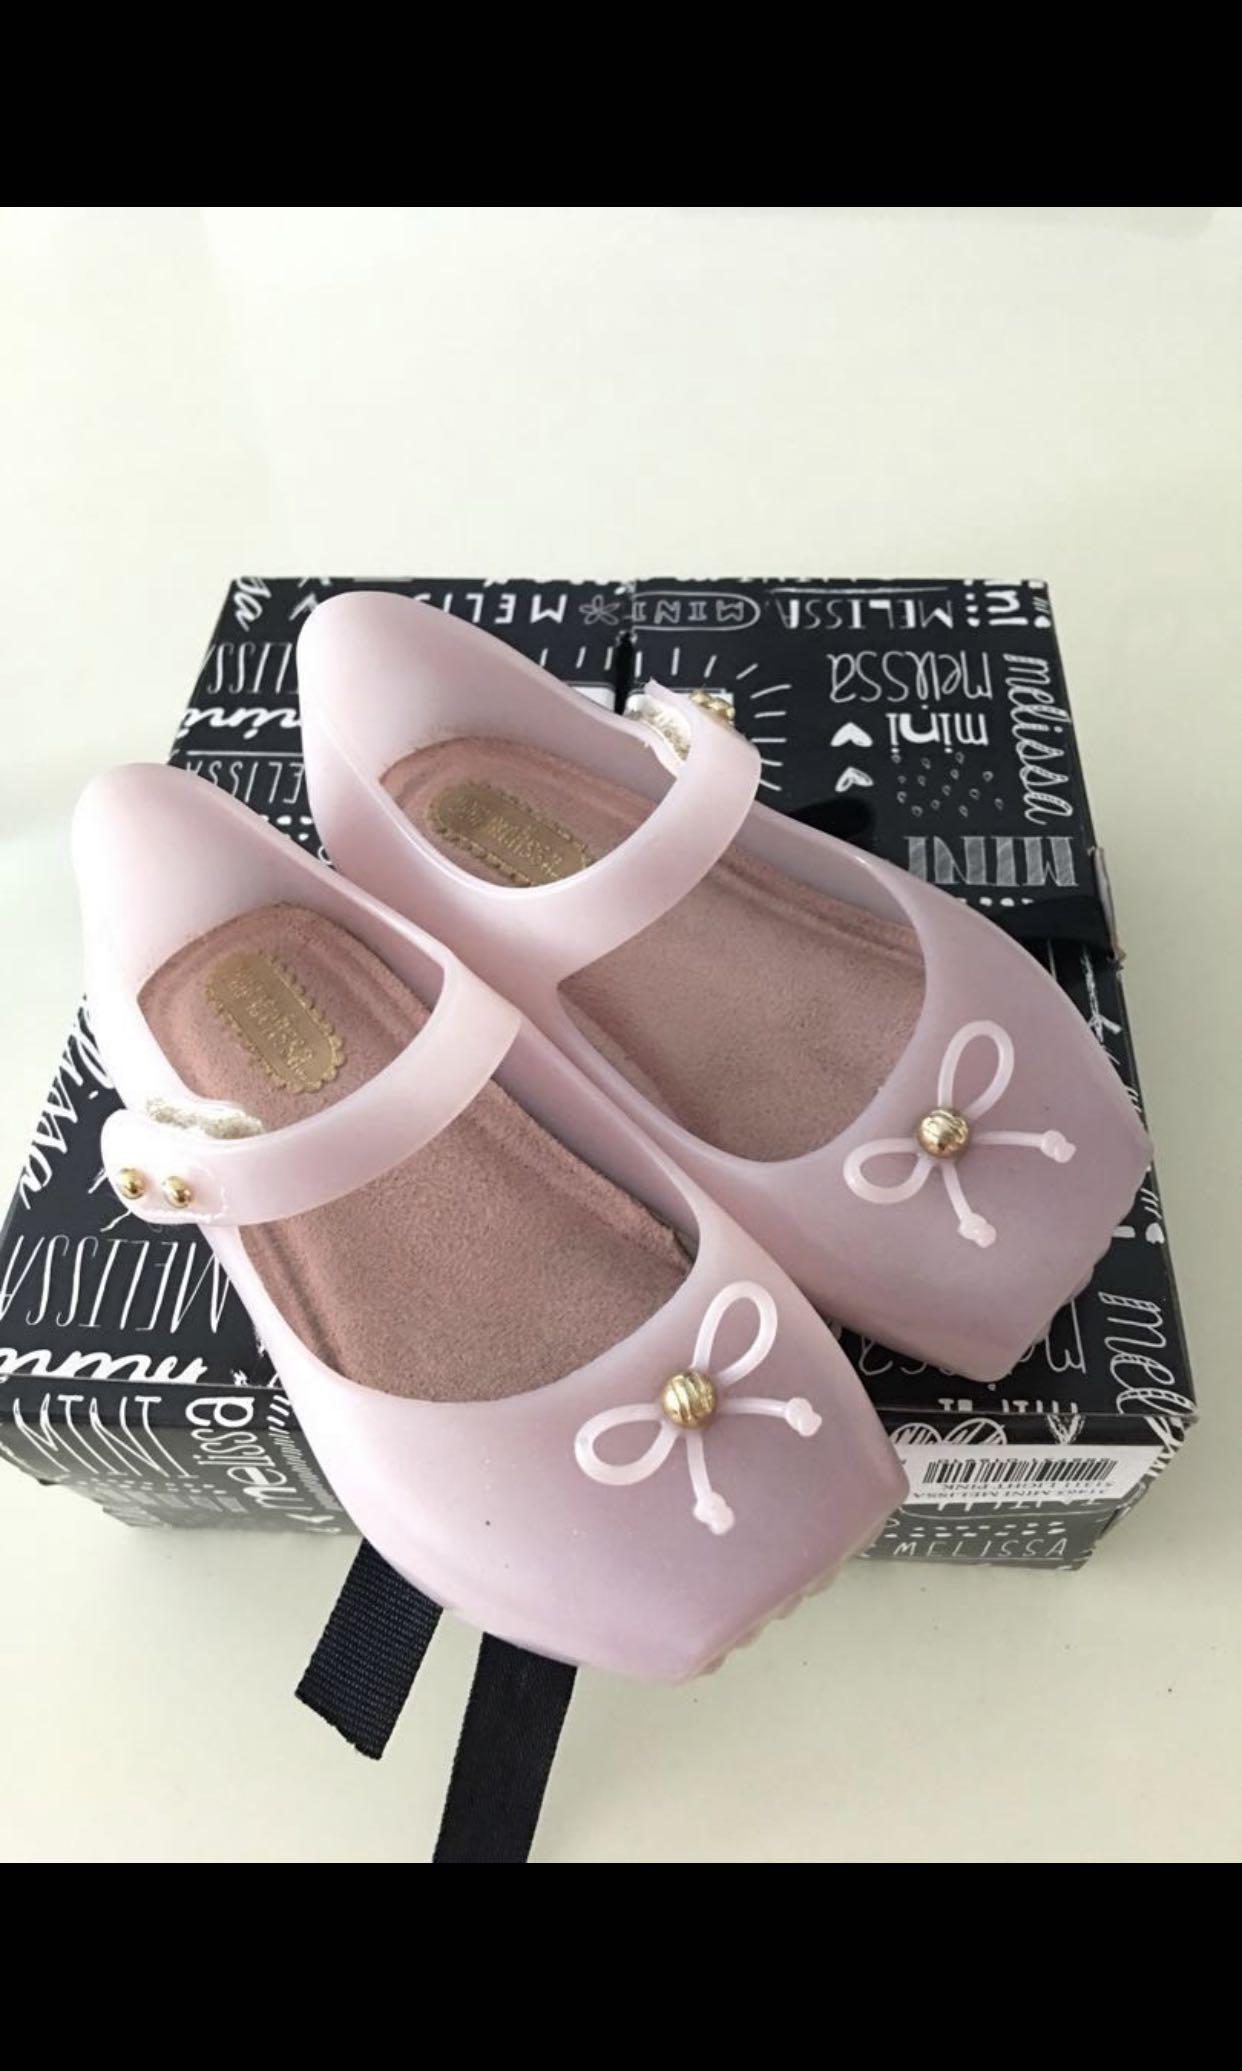 mini melissa ballerina shoes